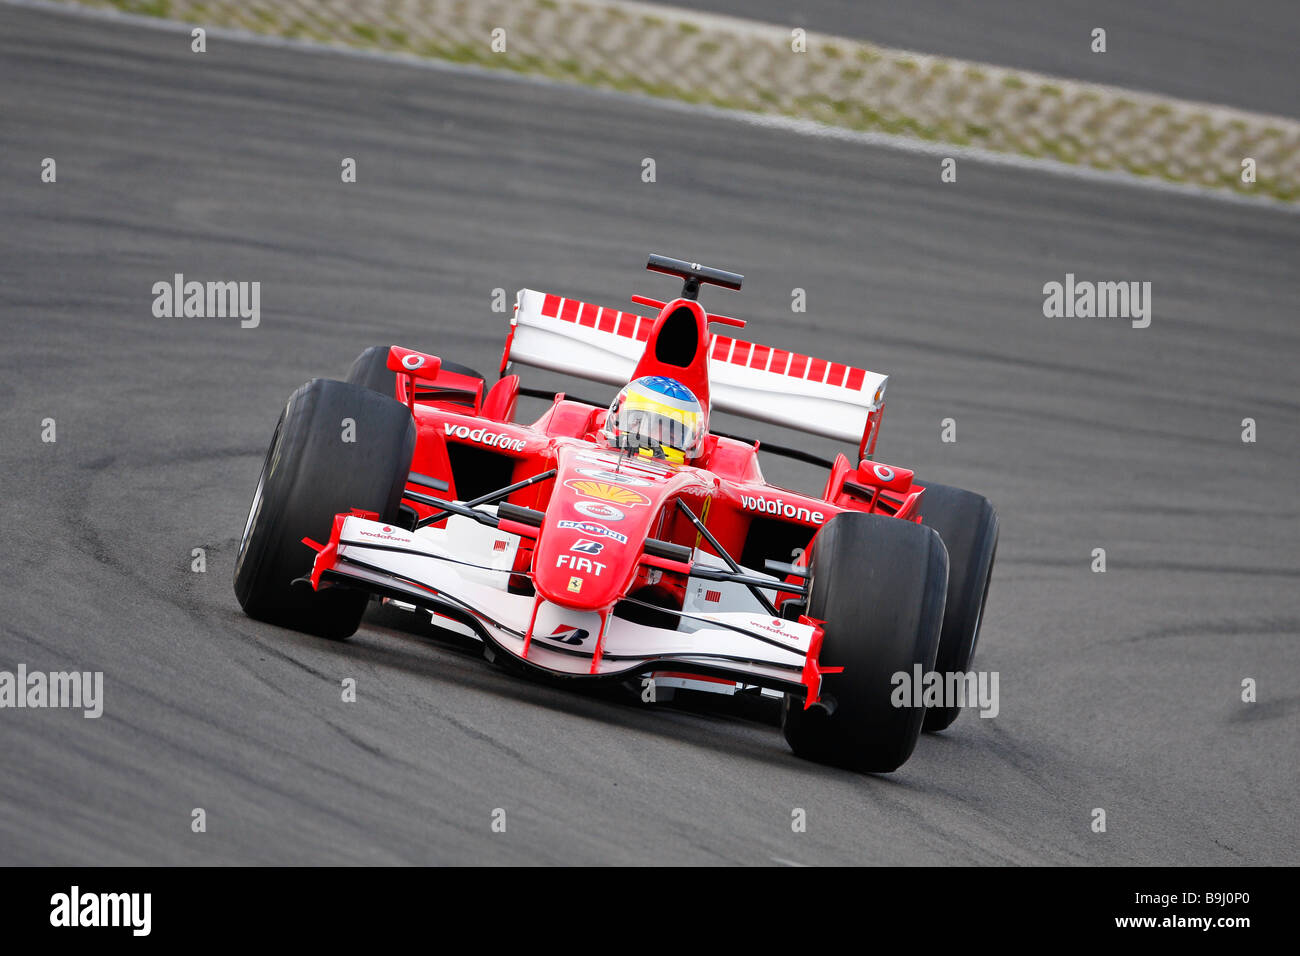 Ferrari Formel 1 F248, model 2006, Ferrari Days 2008, Nuerburgring, Rhineland-Palatinate, Germany, Europe Stock Photo